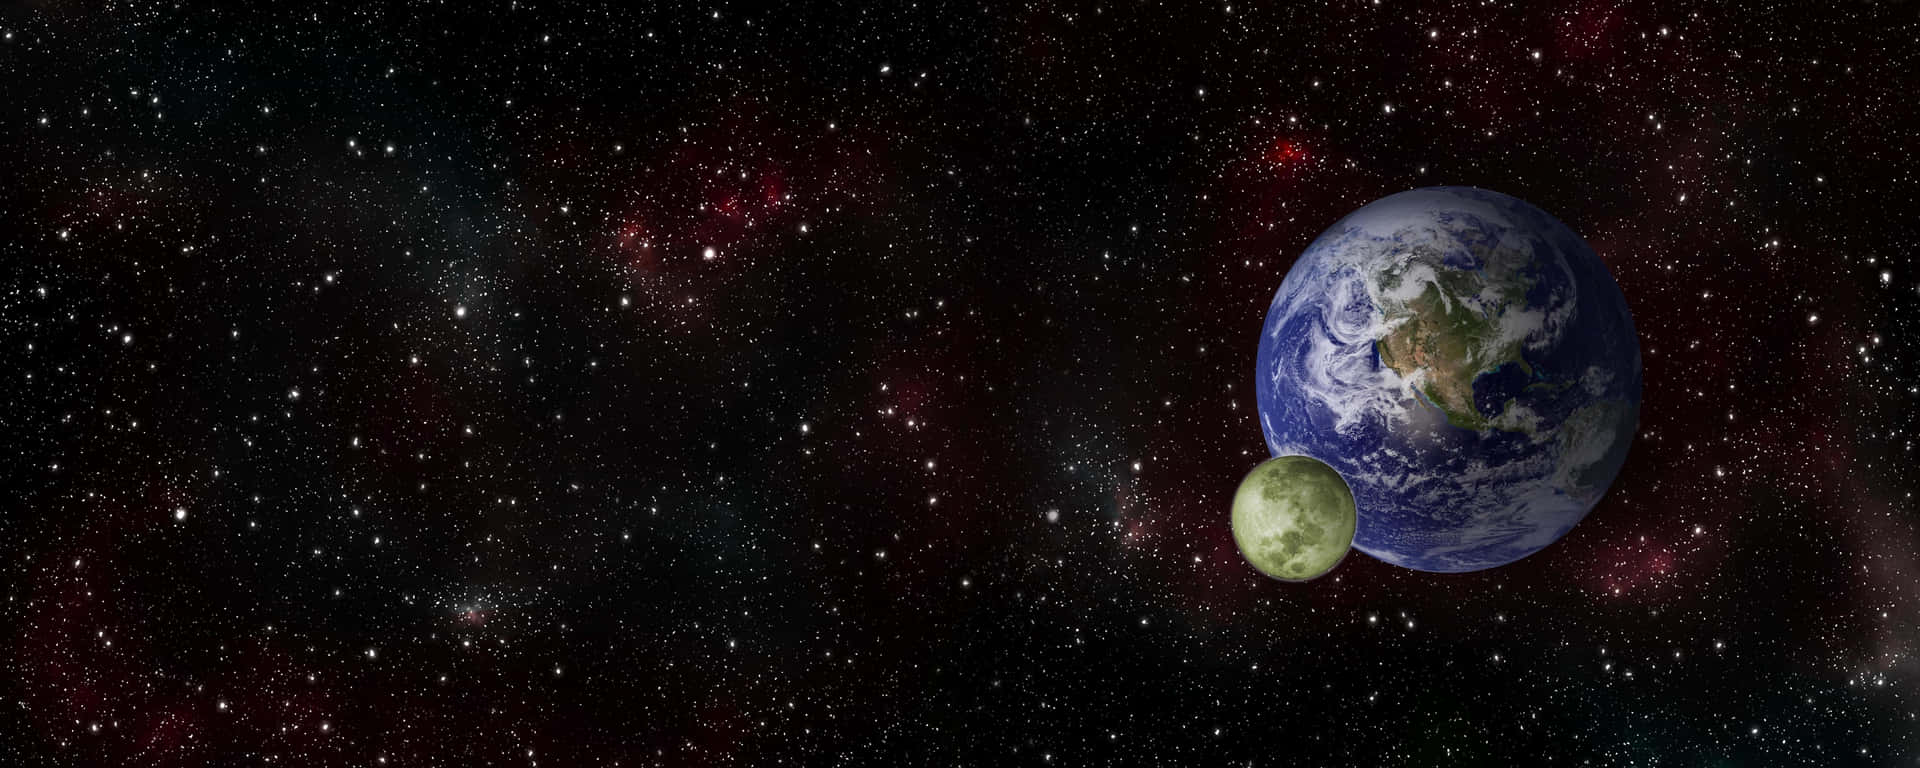 Earthand Moonin Space Wallpaper